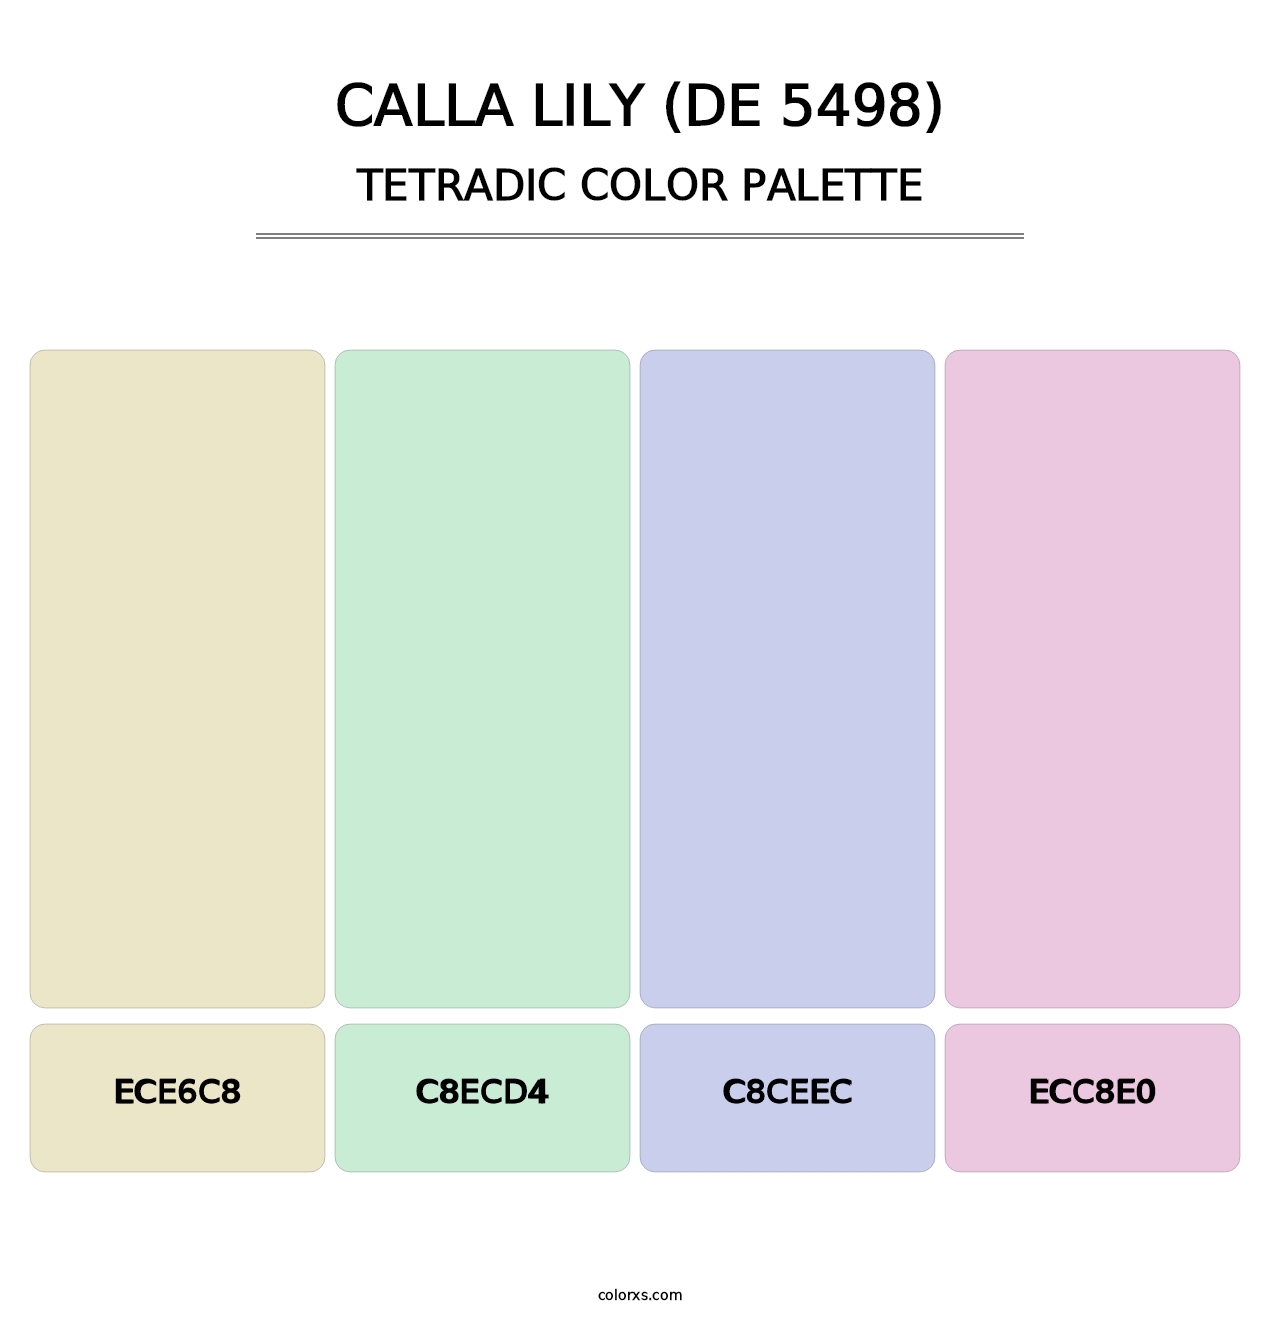 Calla Lily (DE 5498) - Tetradic Color Palette